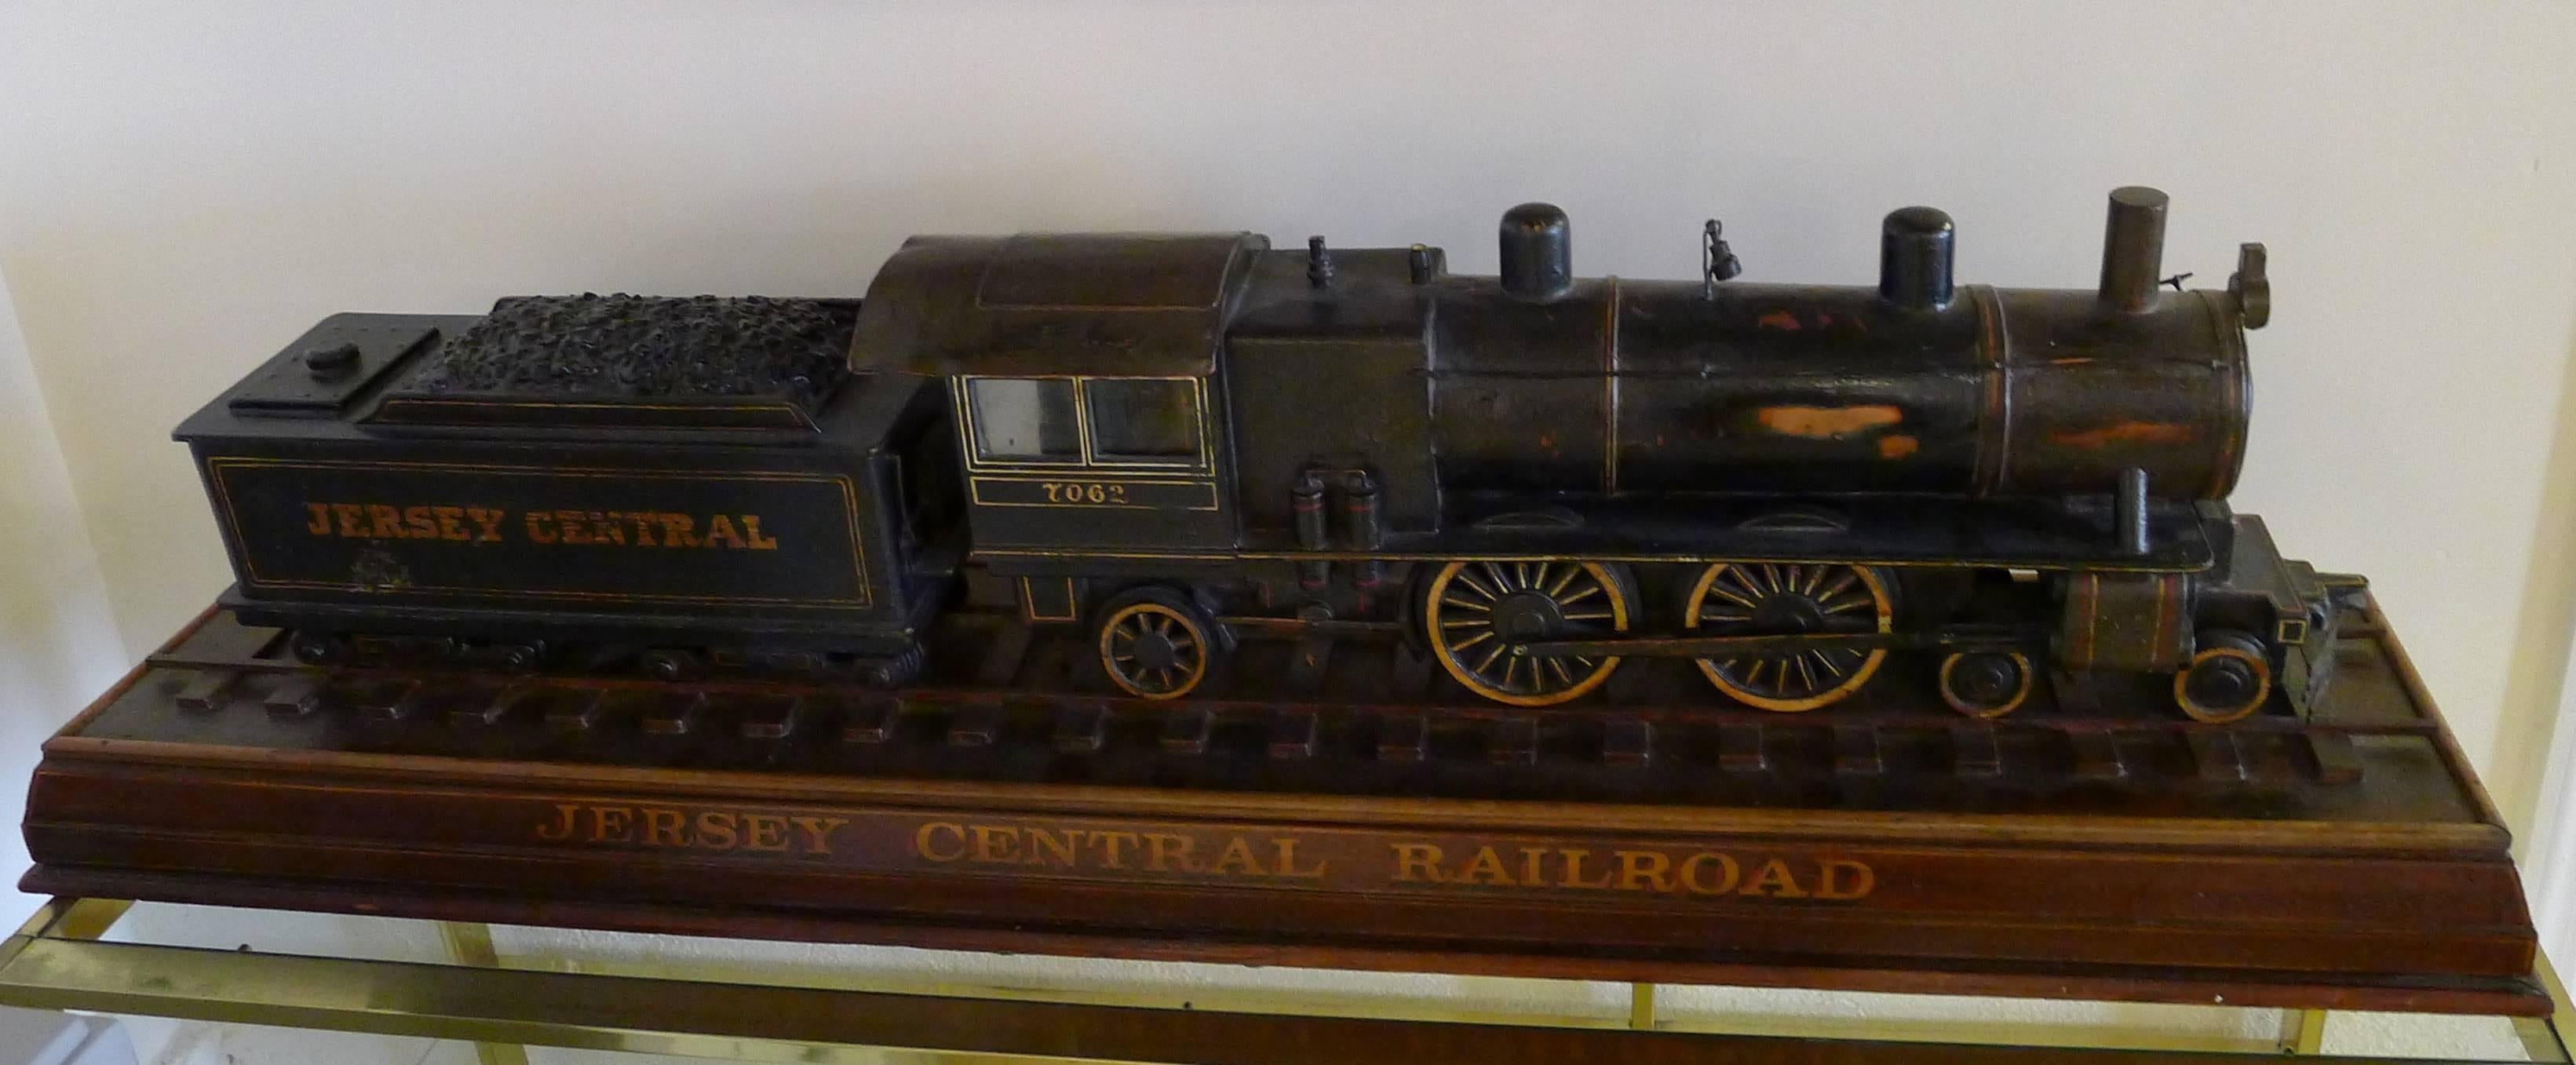 Painted John Elder Jersey Central Railroad 1939 World's Fair Model Train